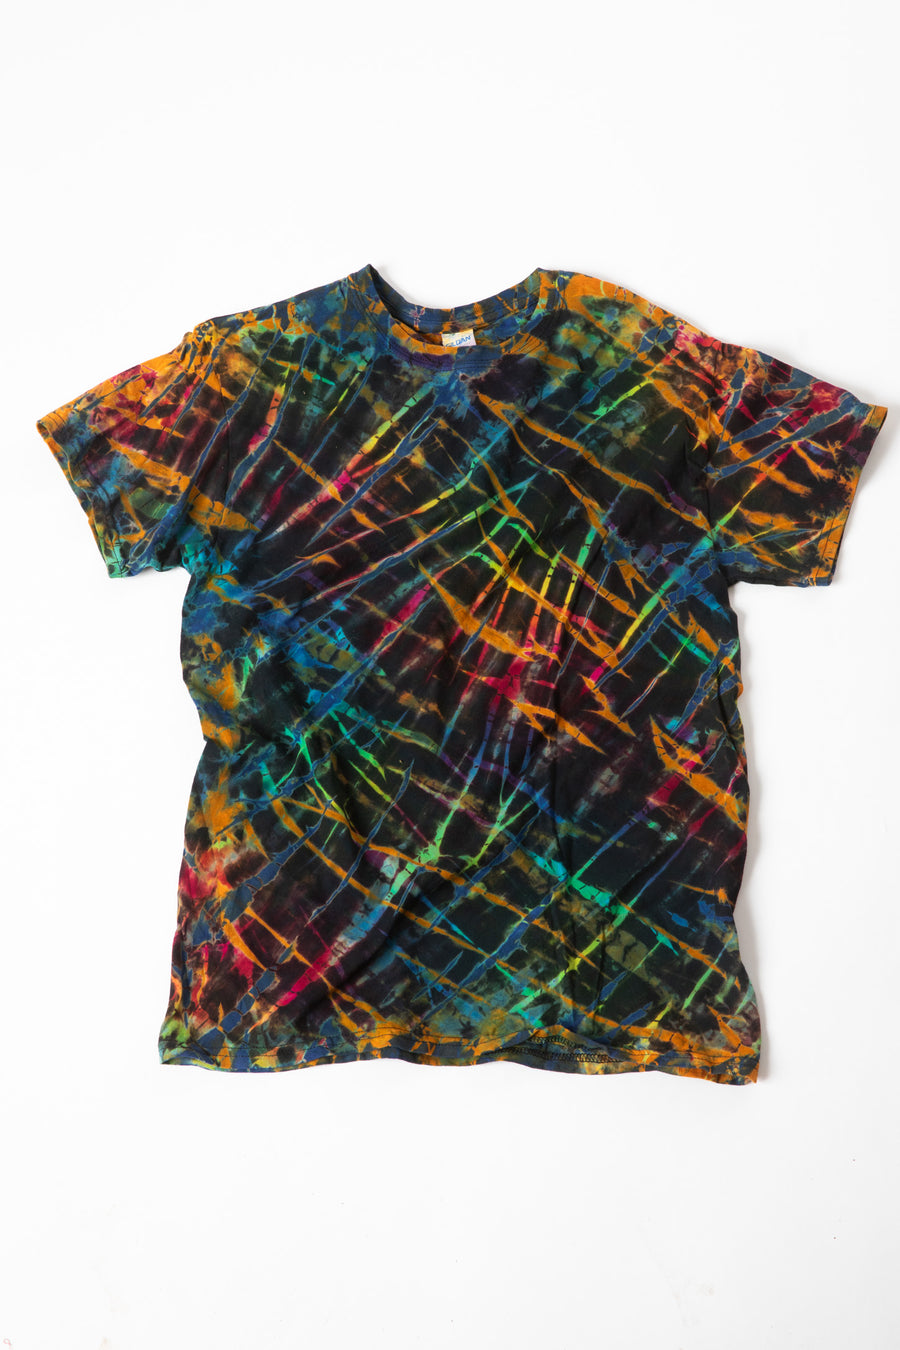 Rainbow Chaos Tie Dye T-Shirt